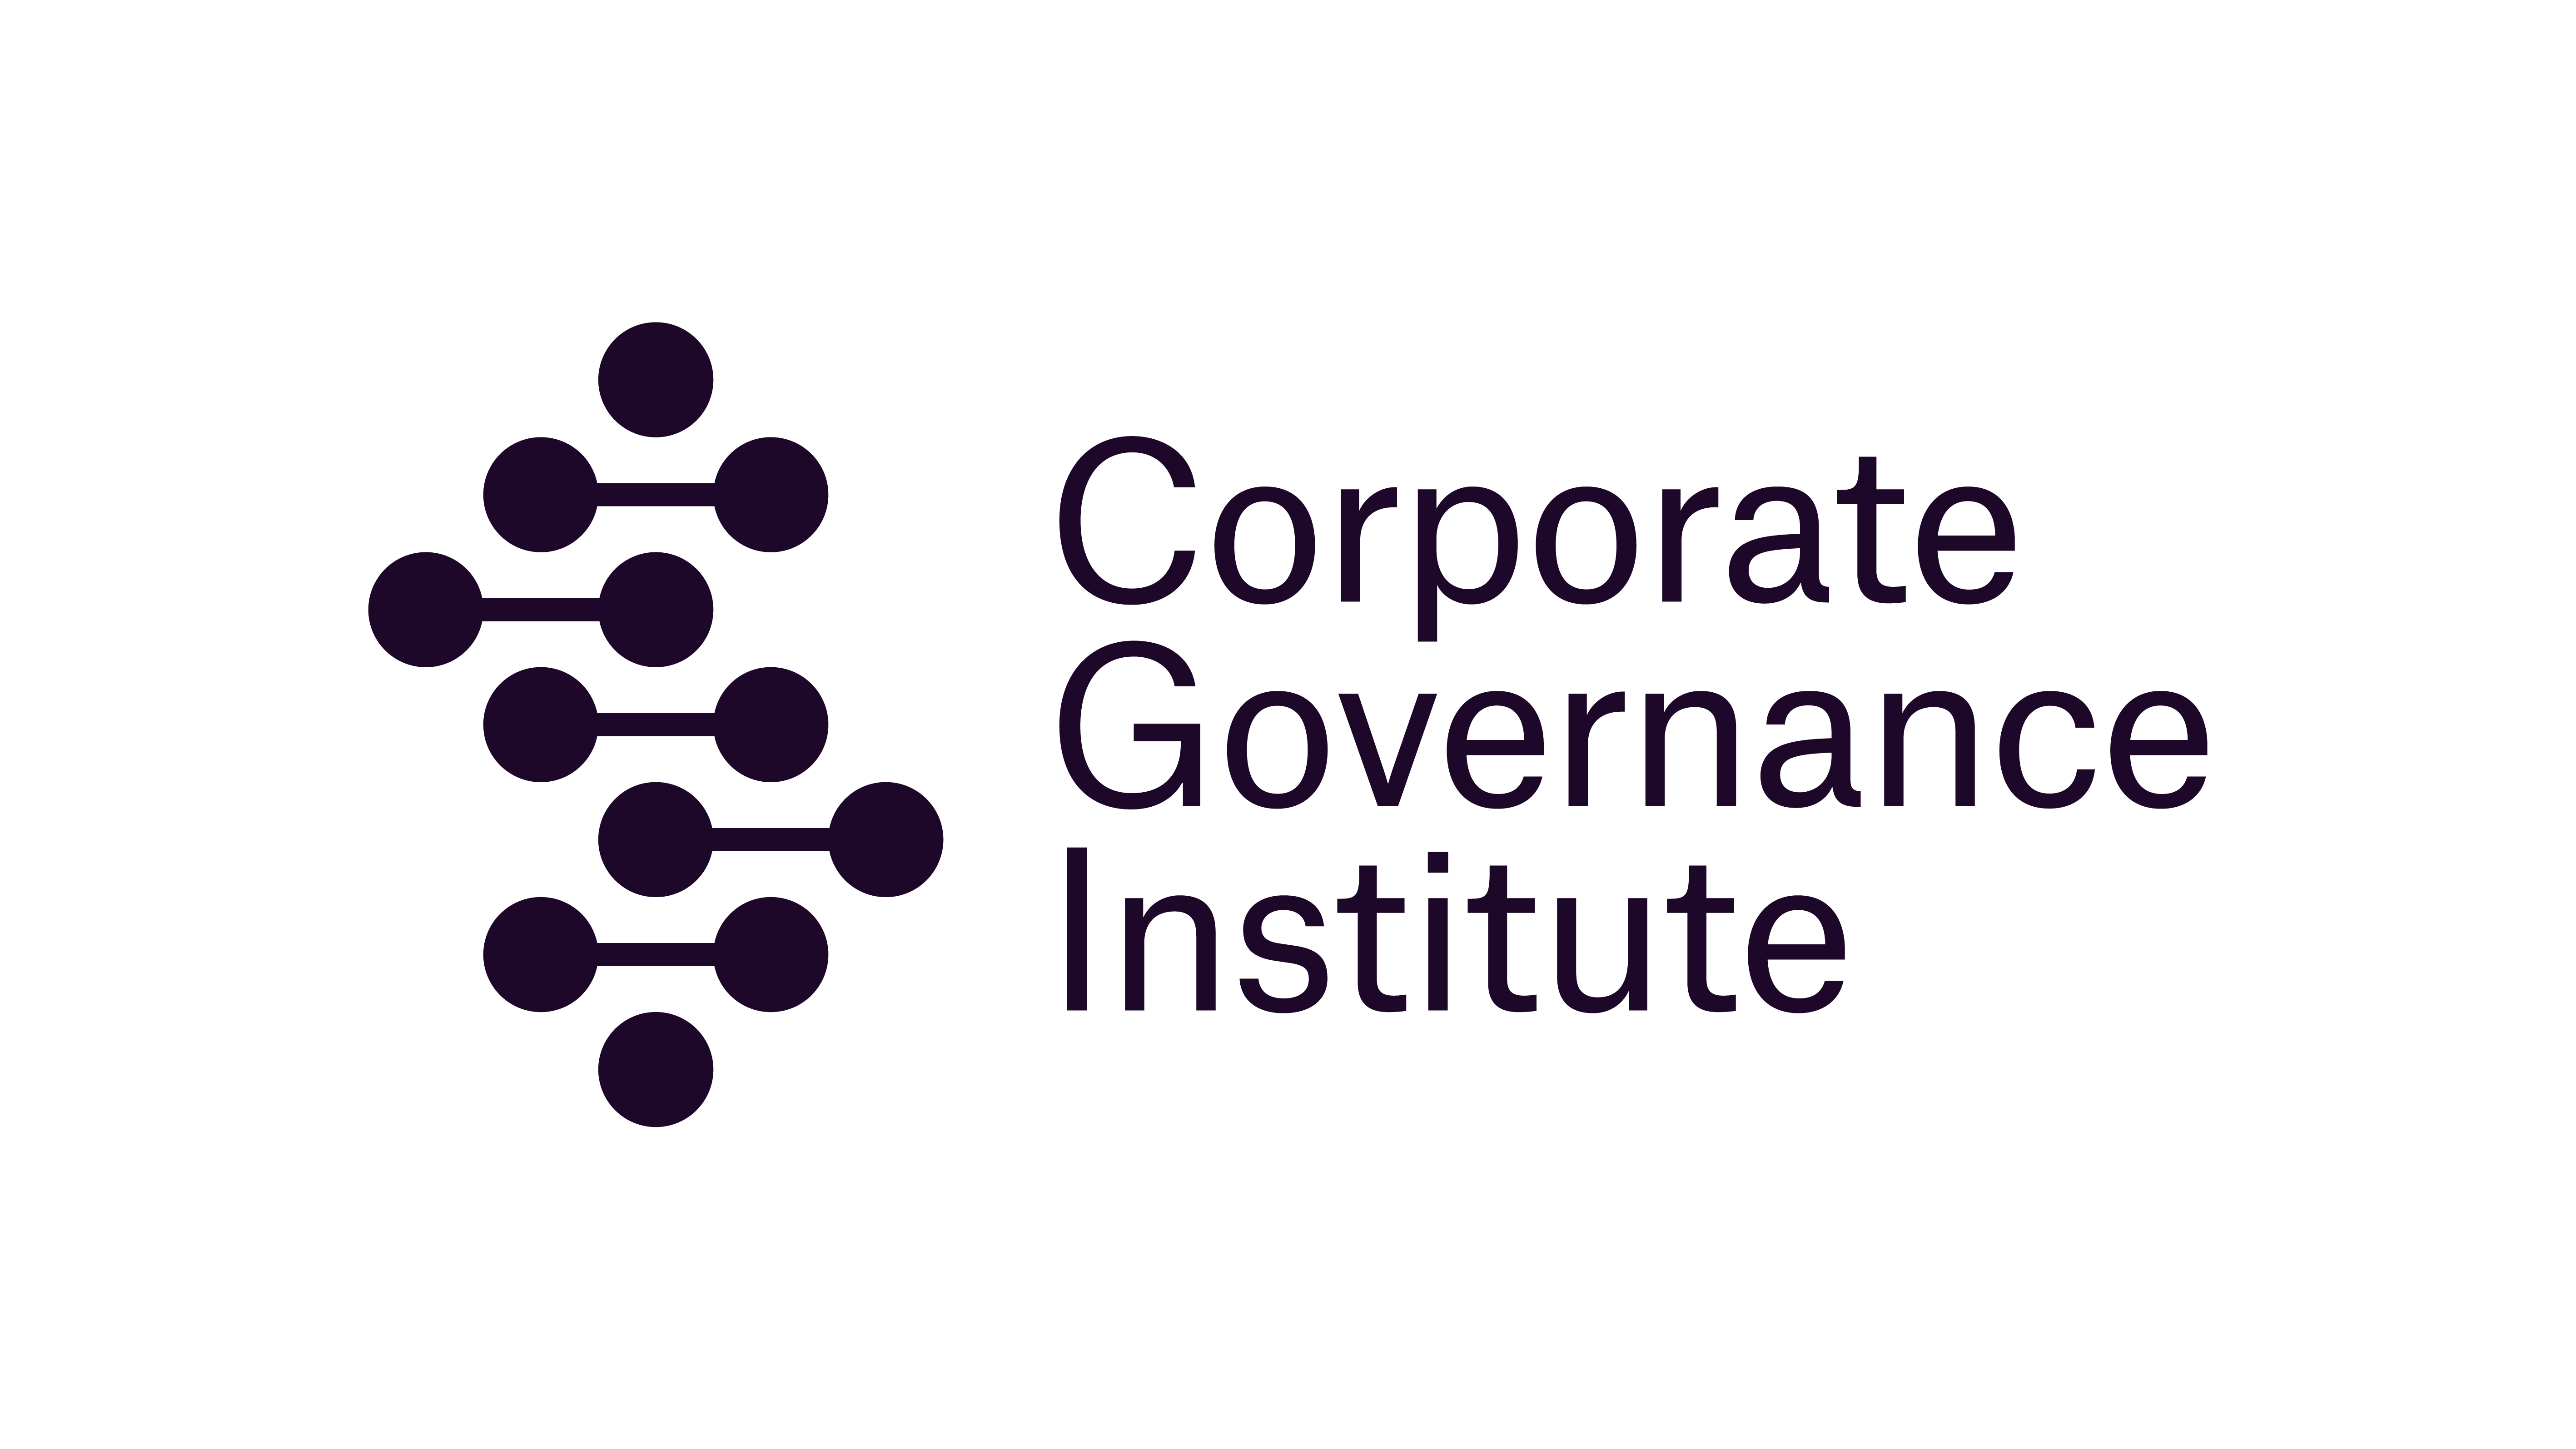 The Corporate Governance Institute logo